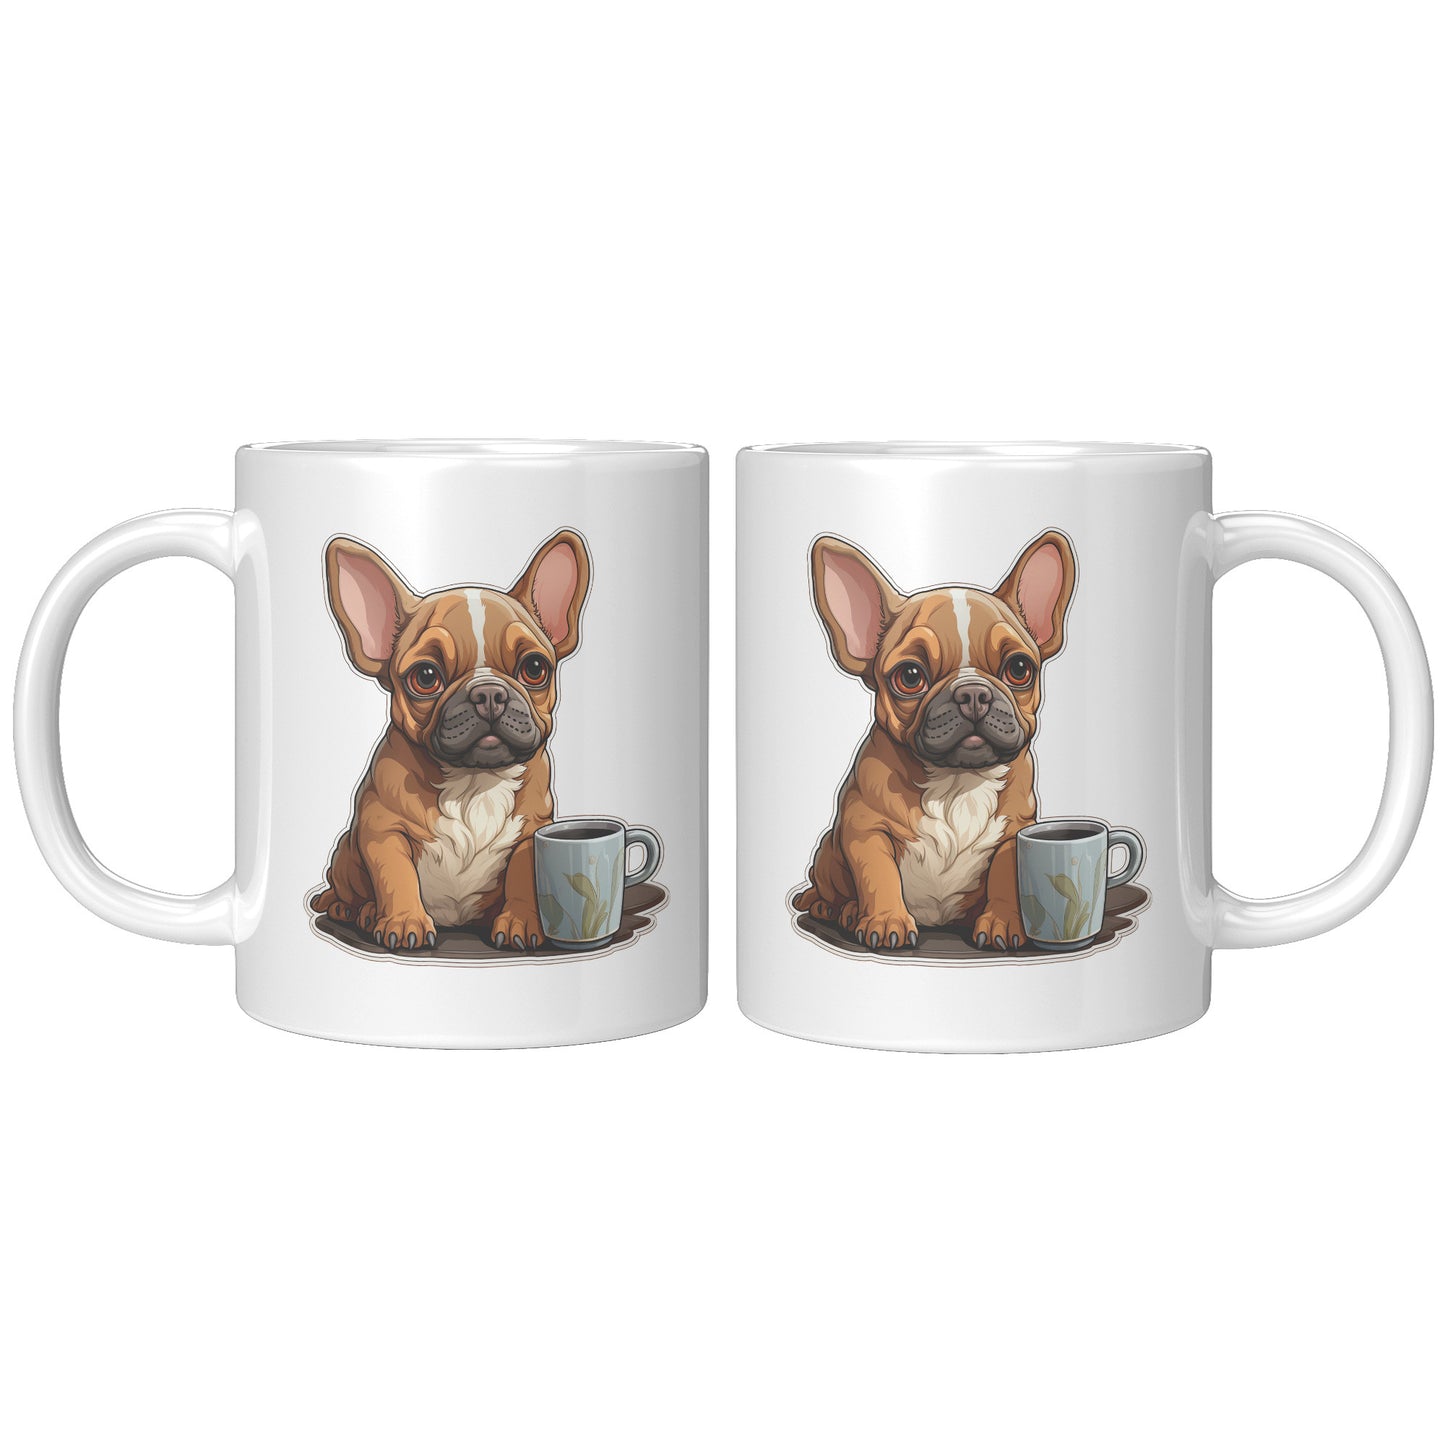 Delightful French Bulldog Artistry Coffee Mug - A Dog Lover's Dream